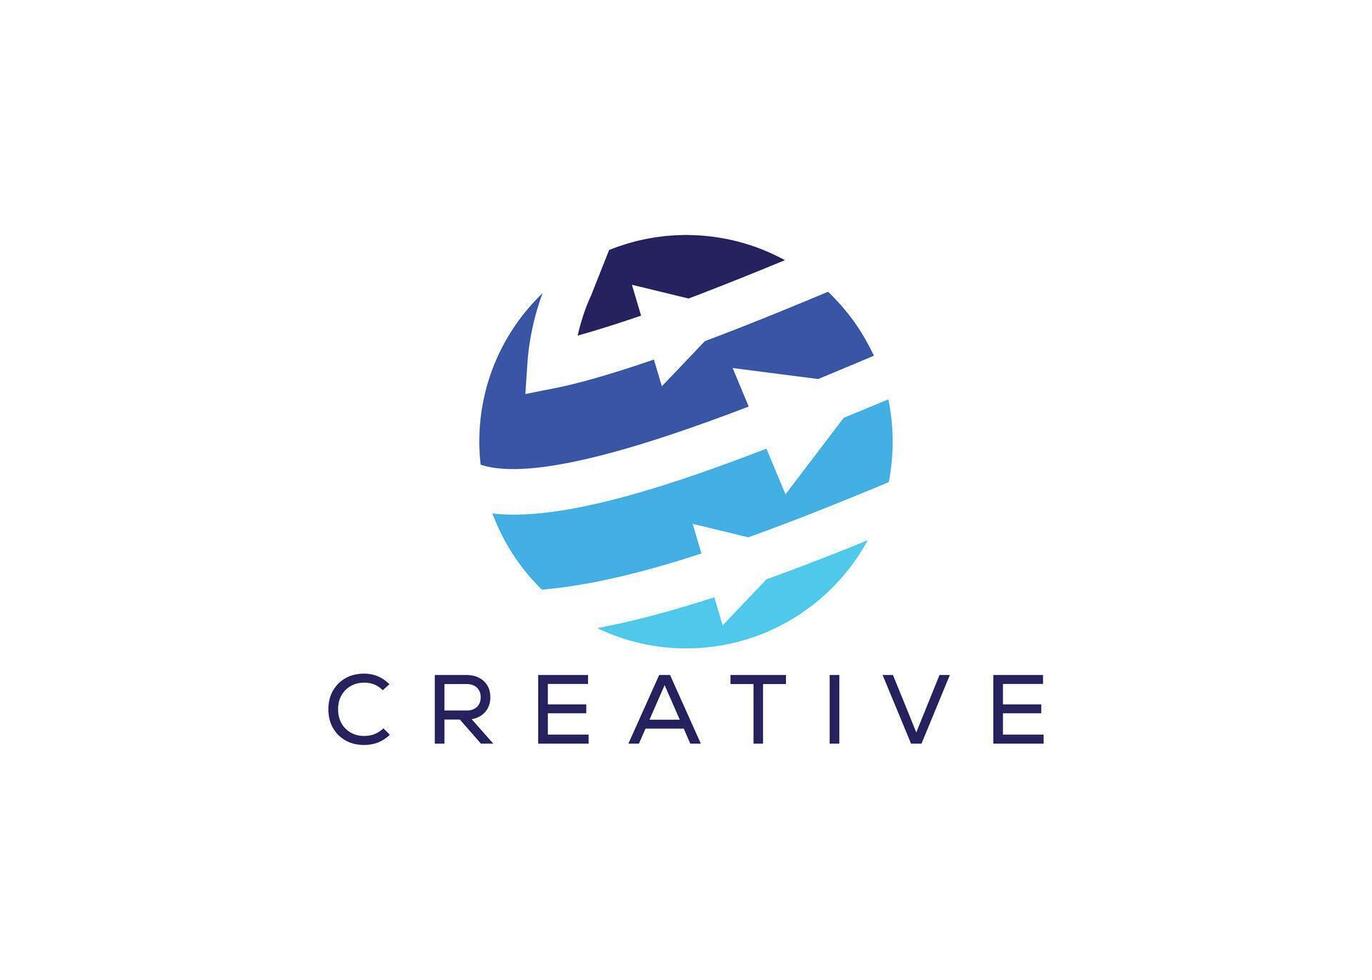 Minimalist arrow up vector logo design template. Creative modern business growth arrow logo